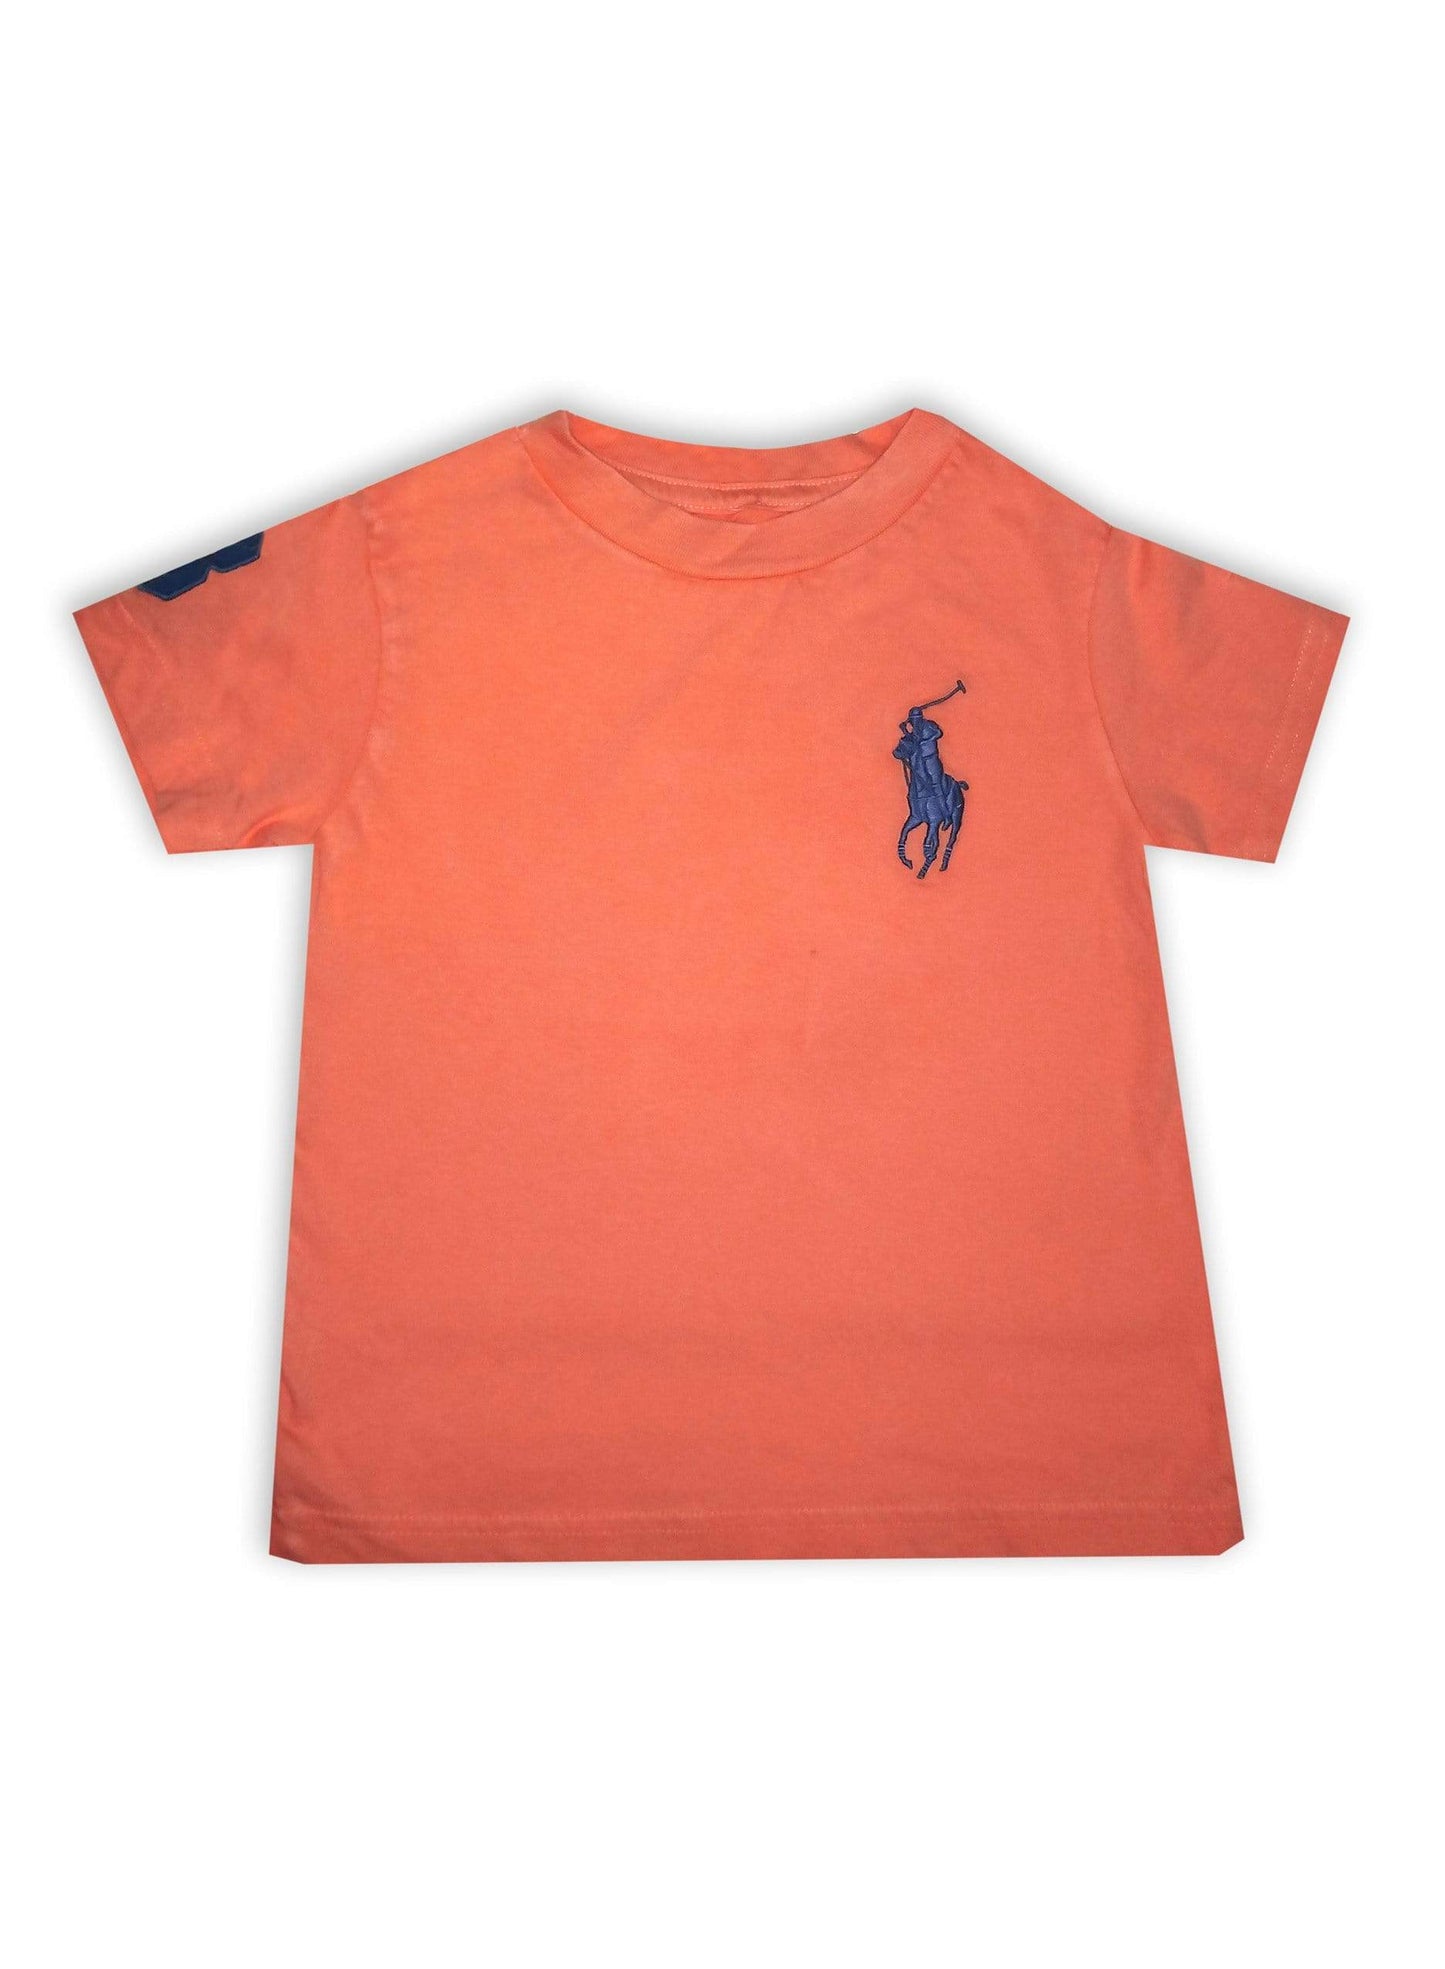 POLO RALPH LAUREN Baby Boy 2 Years / Orange POLO RALPH LAUREN - Baby - Jersey T-Shirt